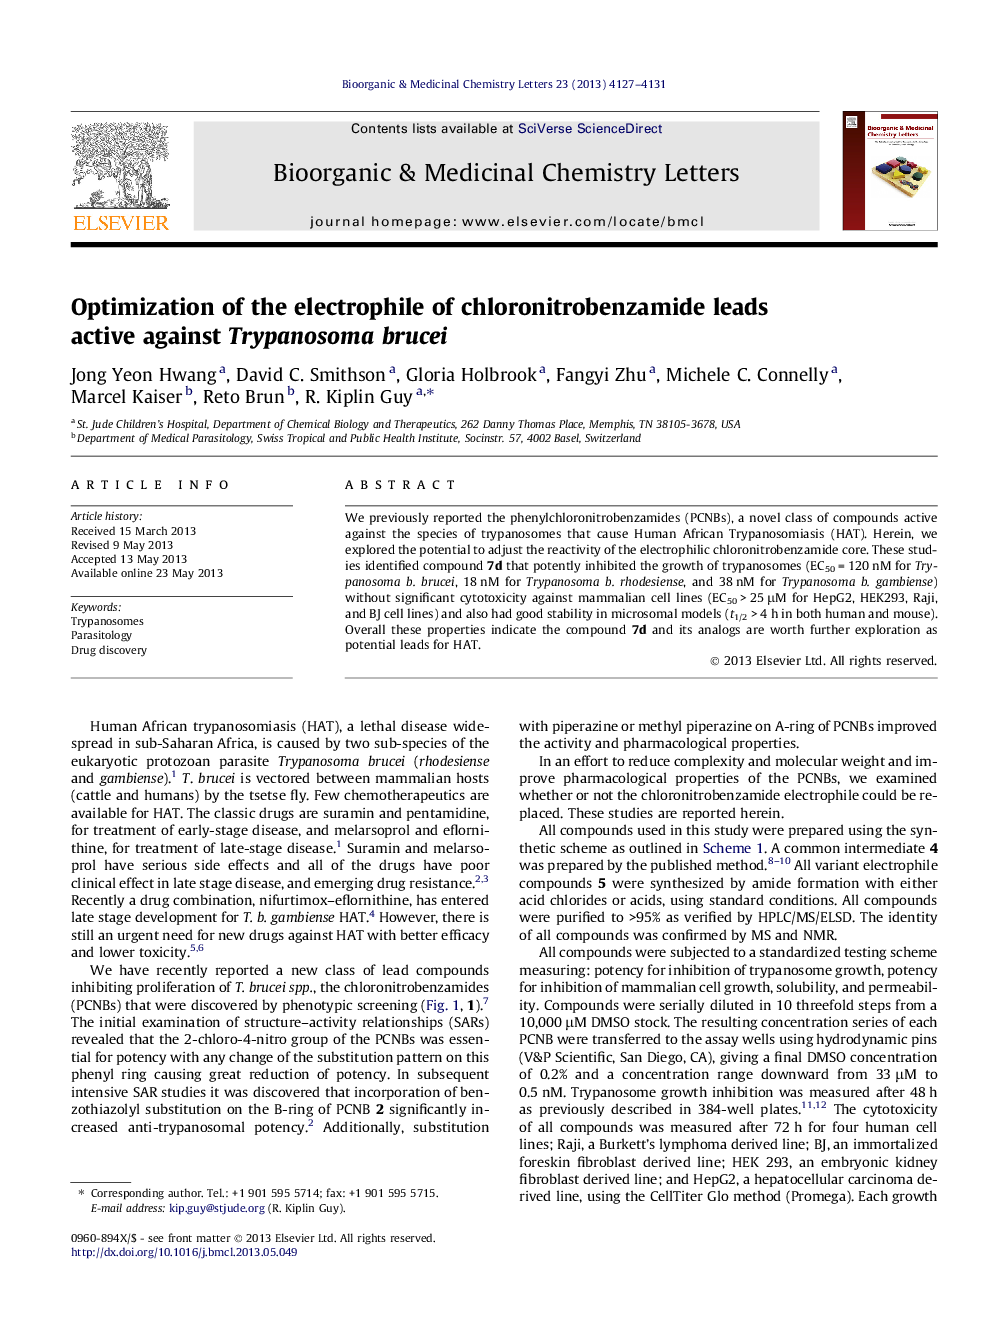 Optimization of the electrophile of chloronitrobenzamide leads active against Trypanosoma brucei